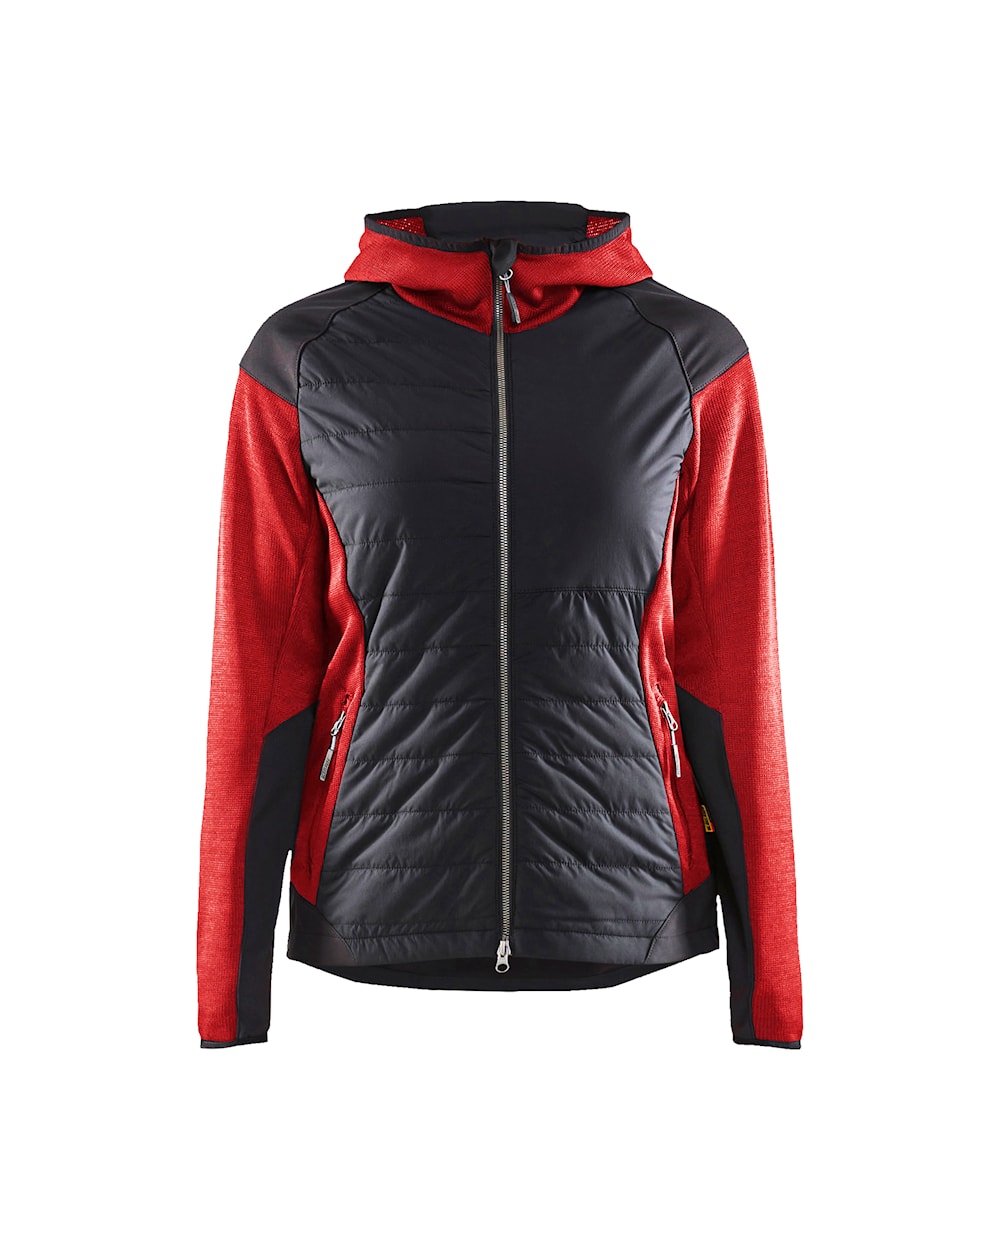  Damen Hybrid Jacke | Farbe: Rot/Schwarz